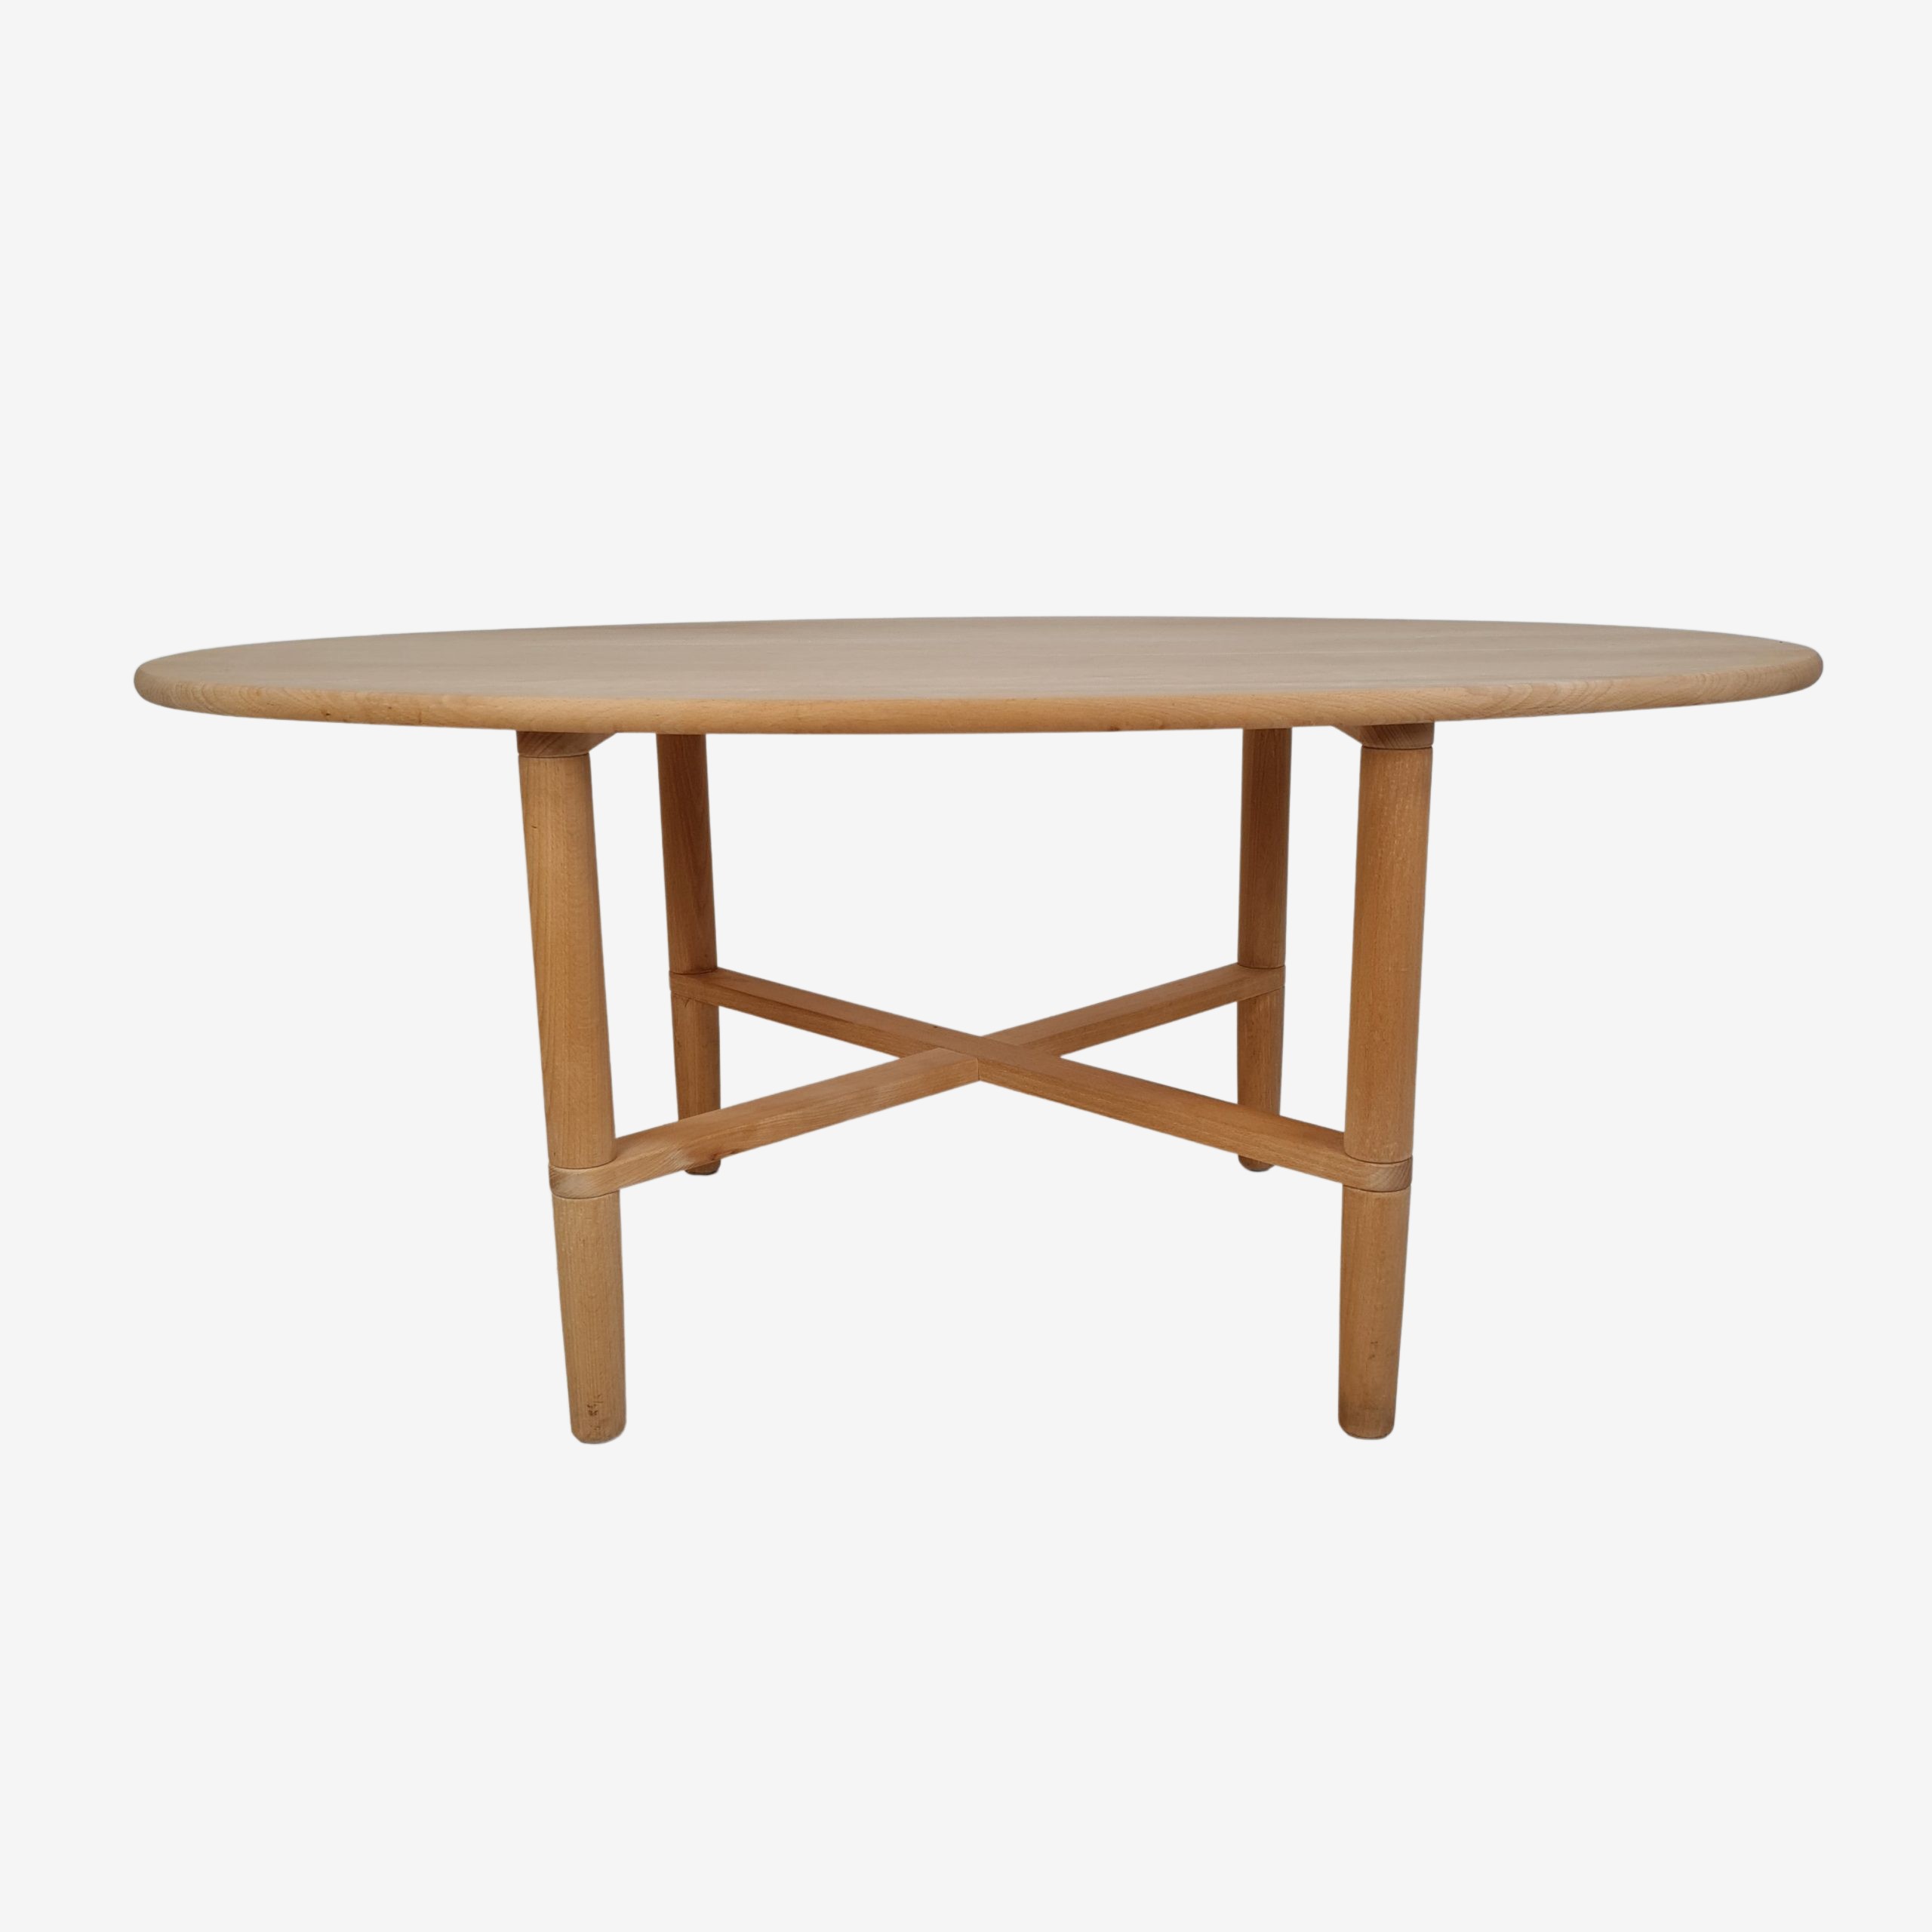 Oval coffee table model Opus 8 | Nissen & Gehl | Haslev furniture joinery | Soap-treated beech